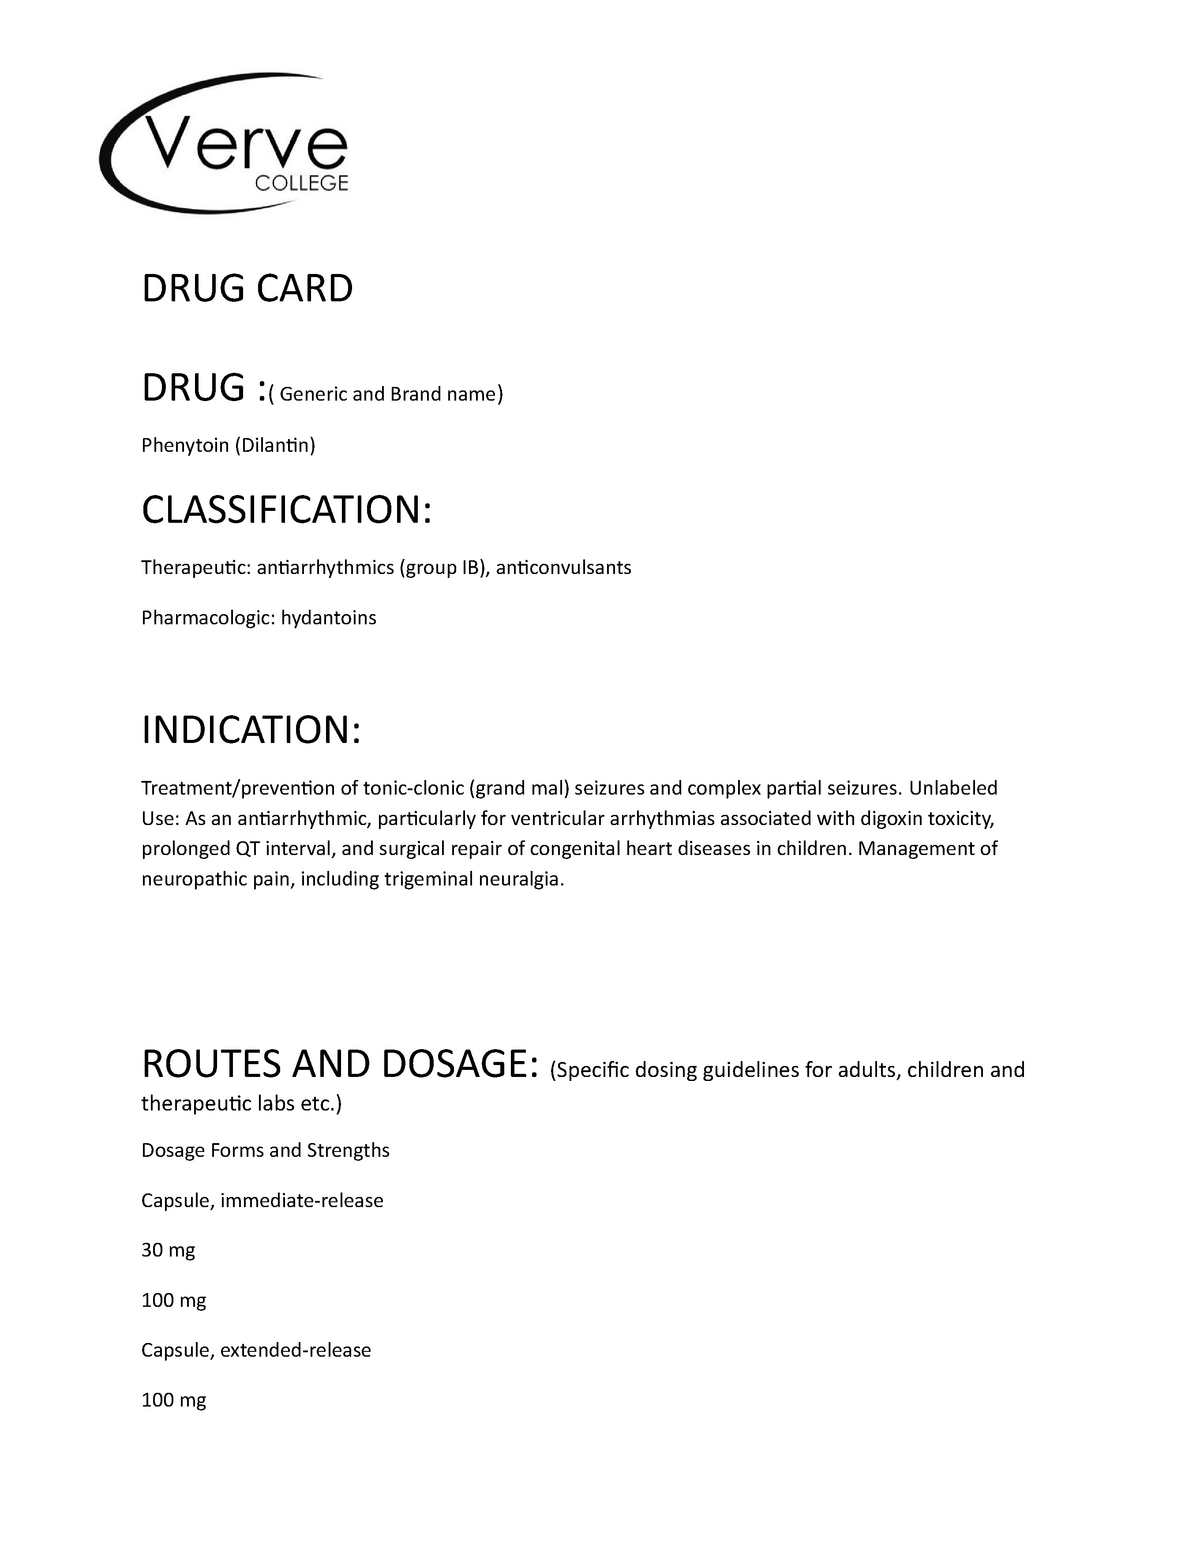 Phenytoin drug card for phramoclogy DRUG CARD DRUG ( Generic and